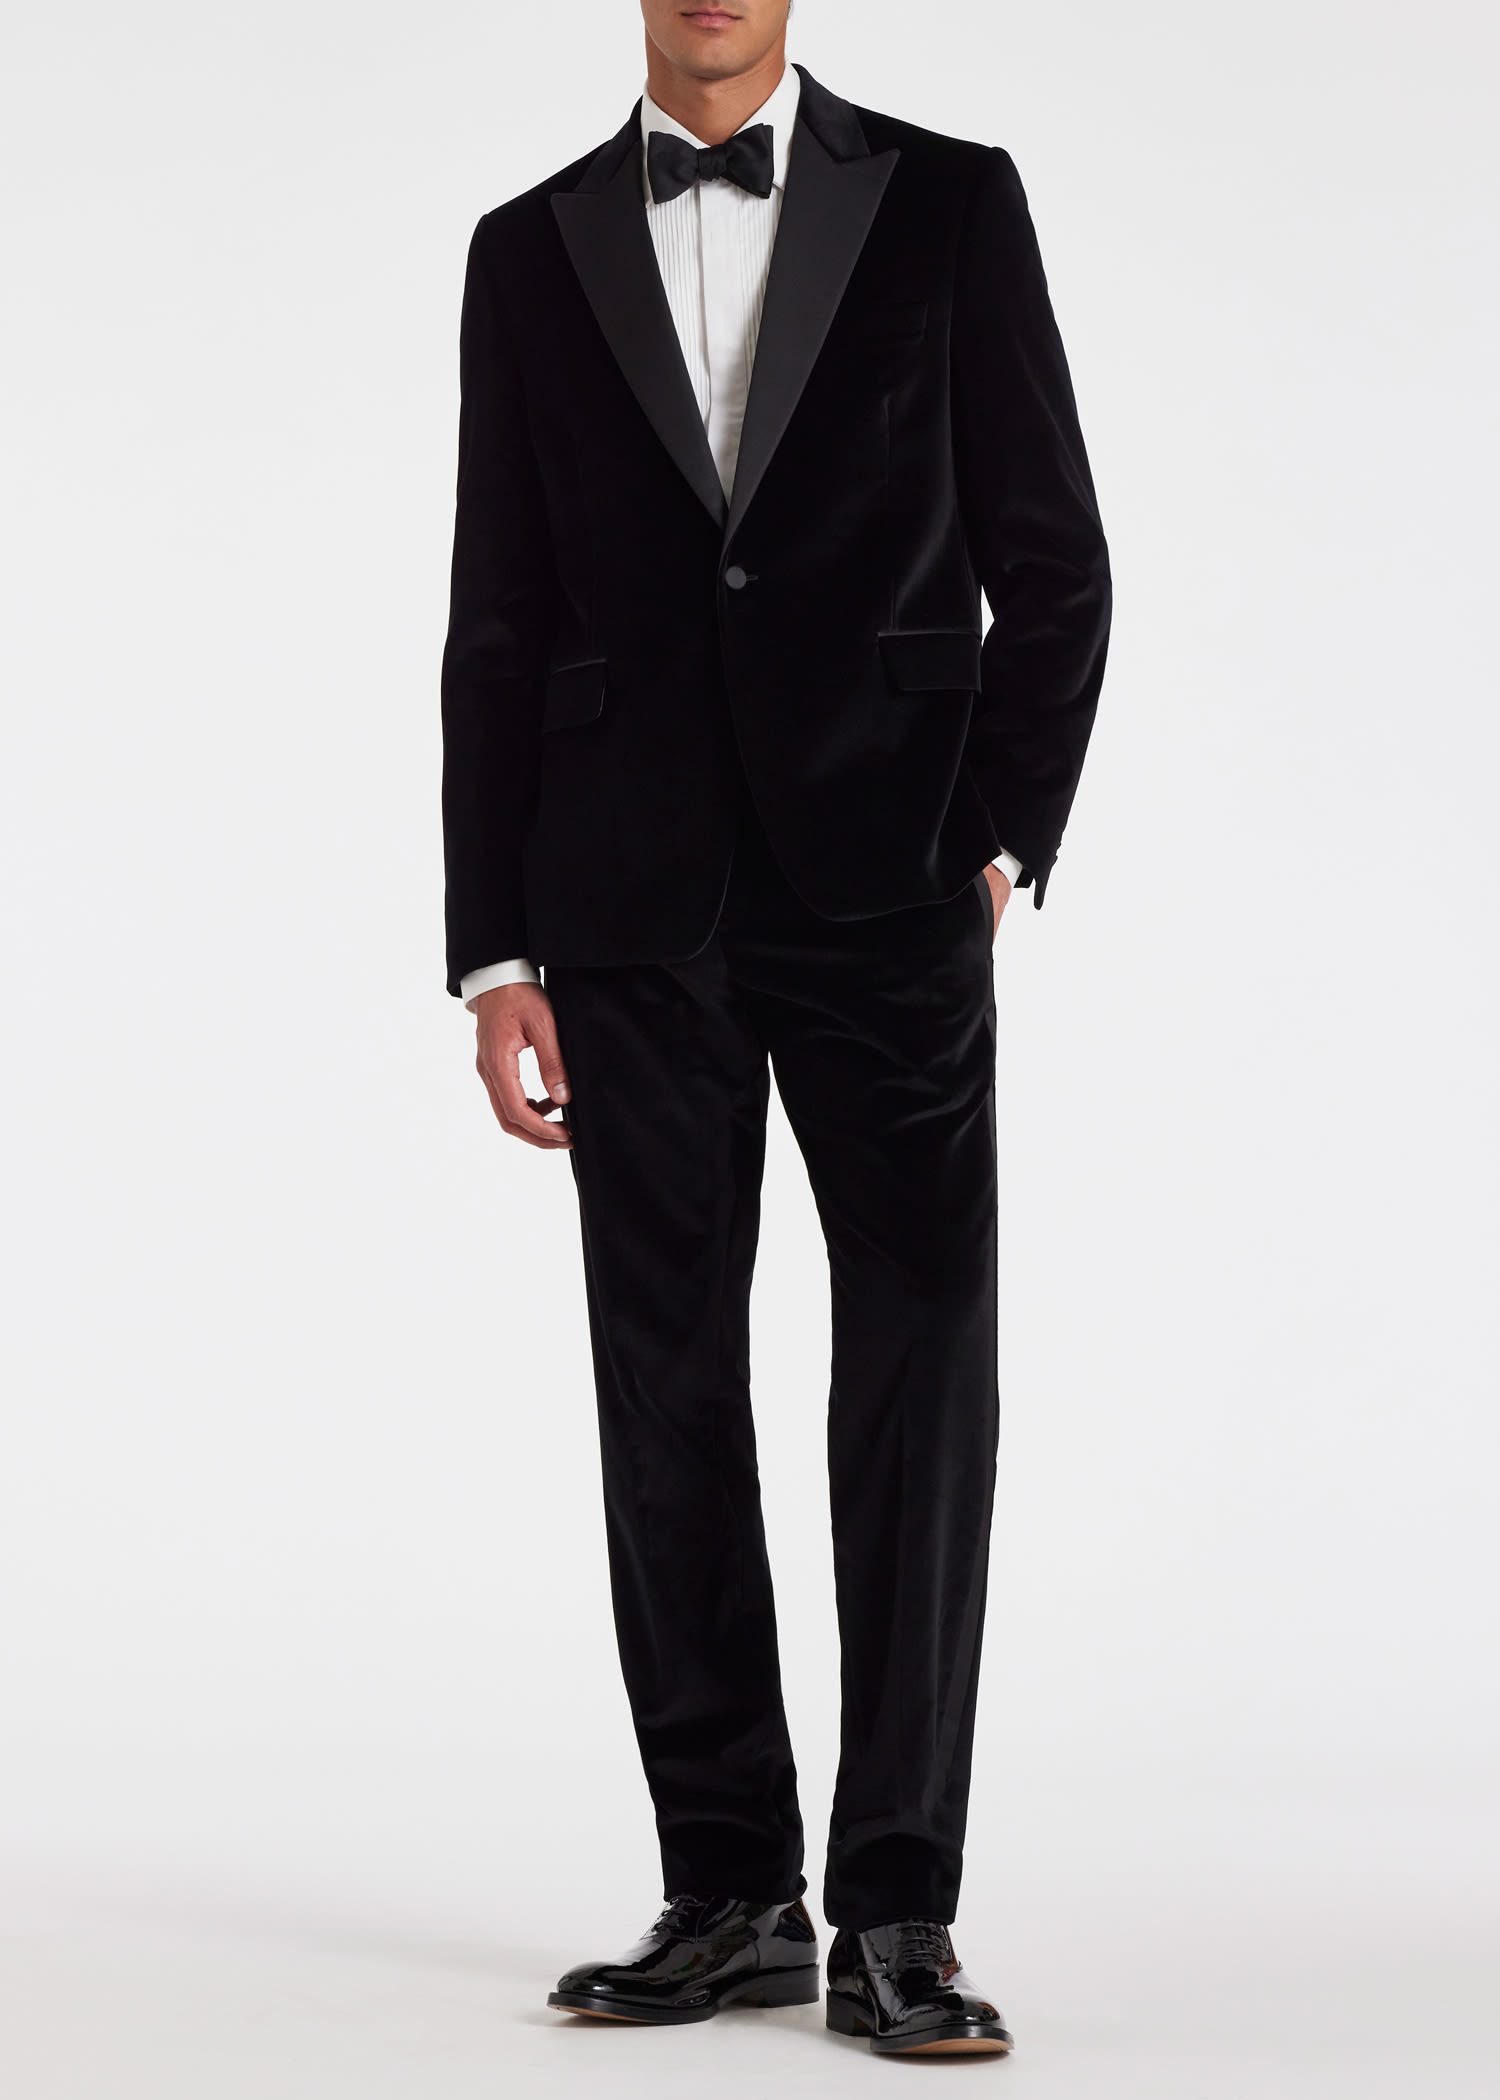 Men's Tailored-Fit Black Velvet Evening Suit